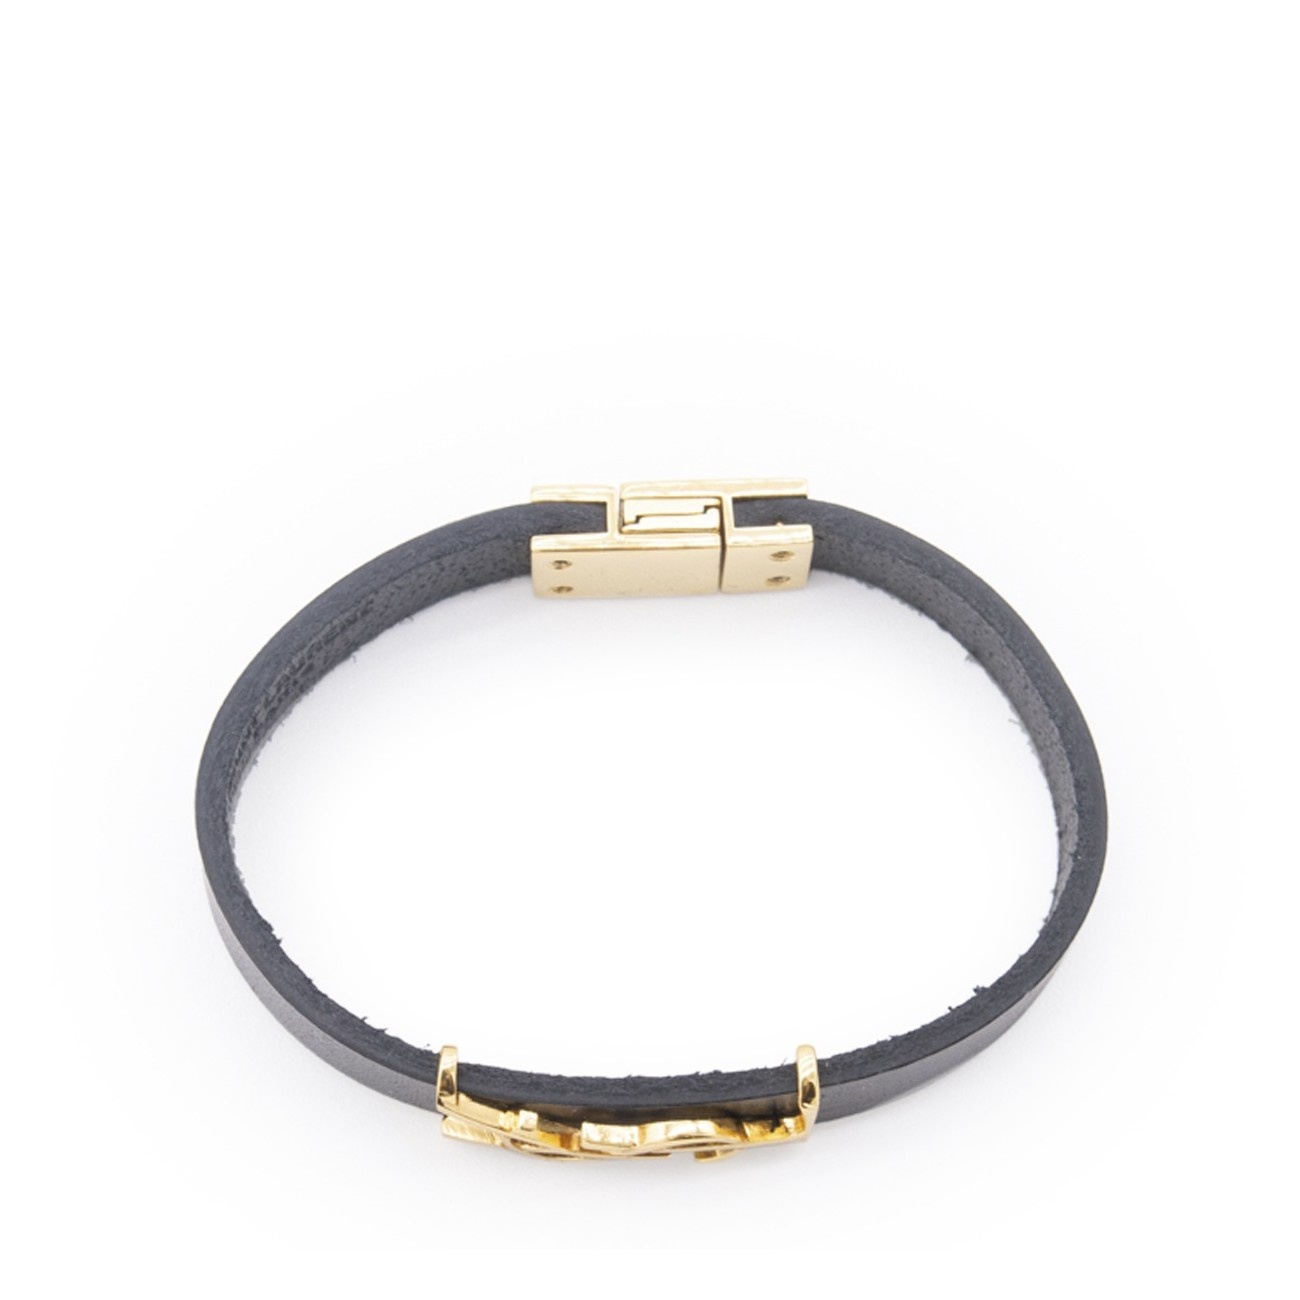 black leather ysl bracelet - 3